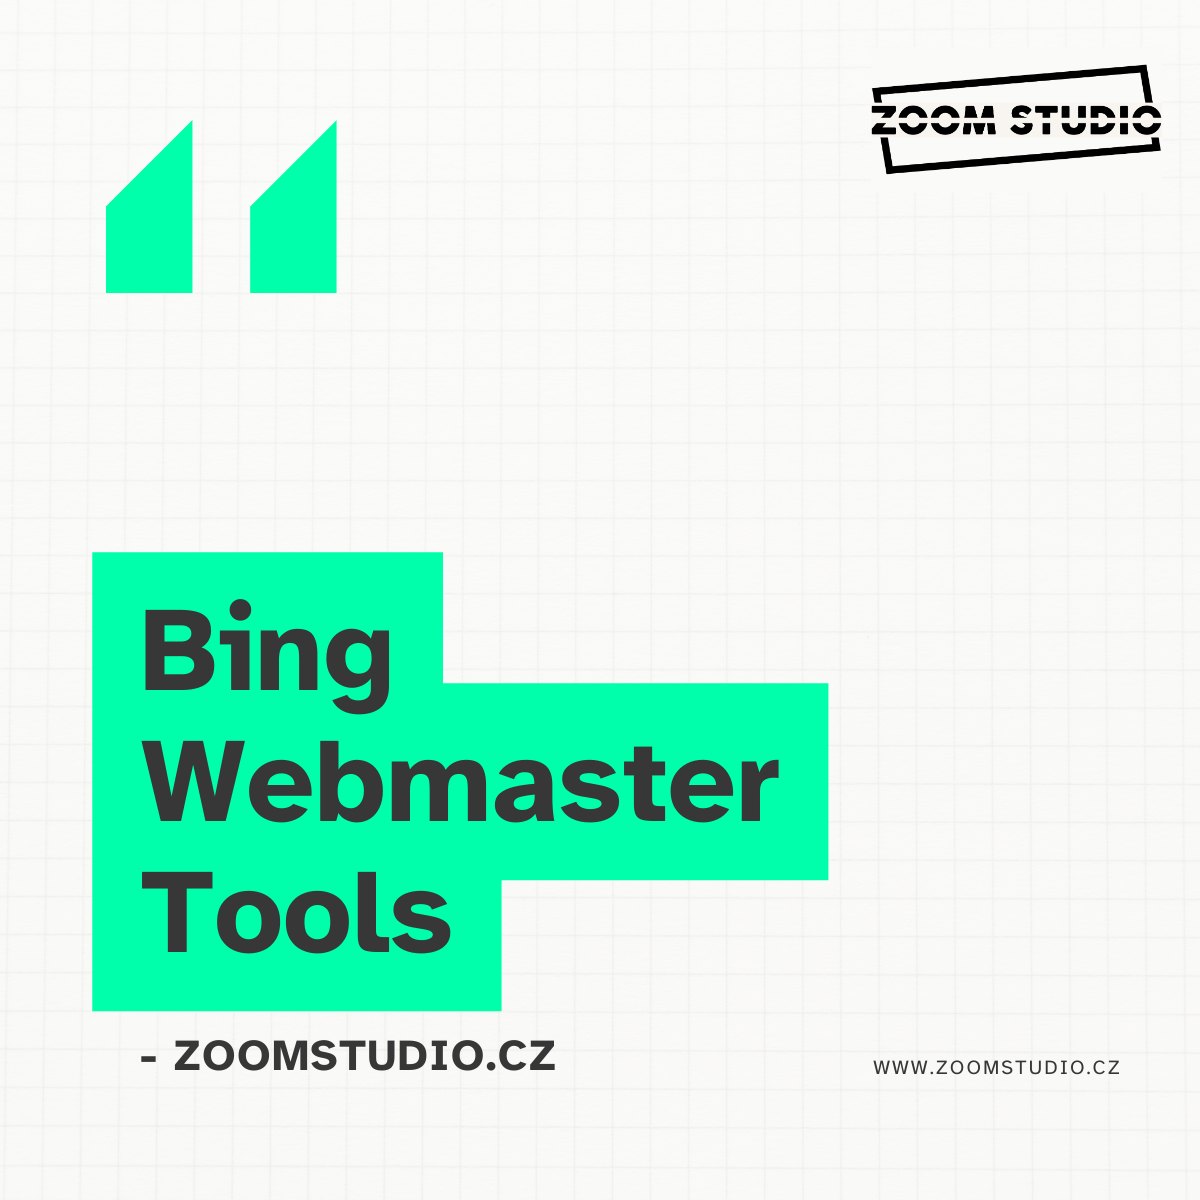 Co je Bing Webmaster Tools?